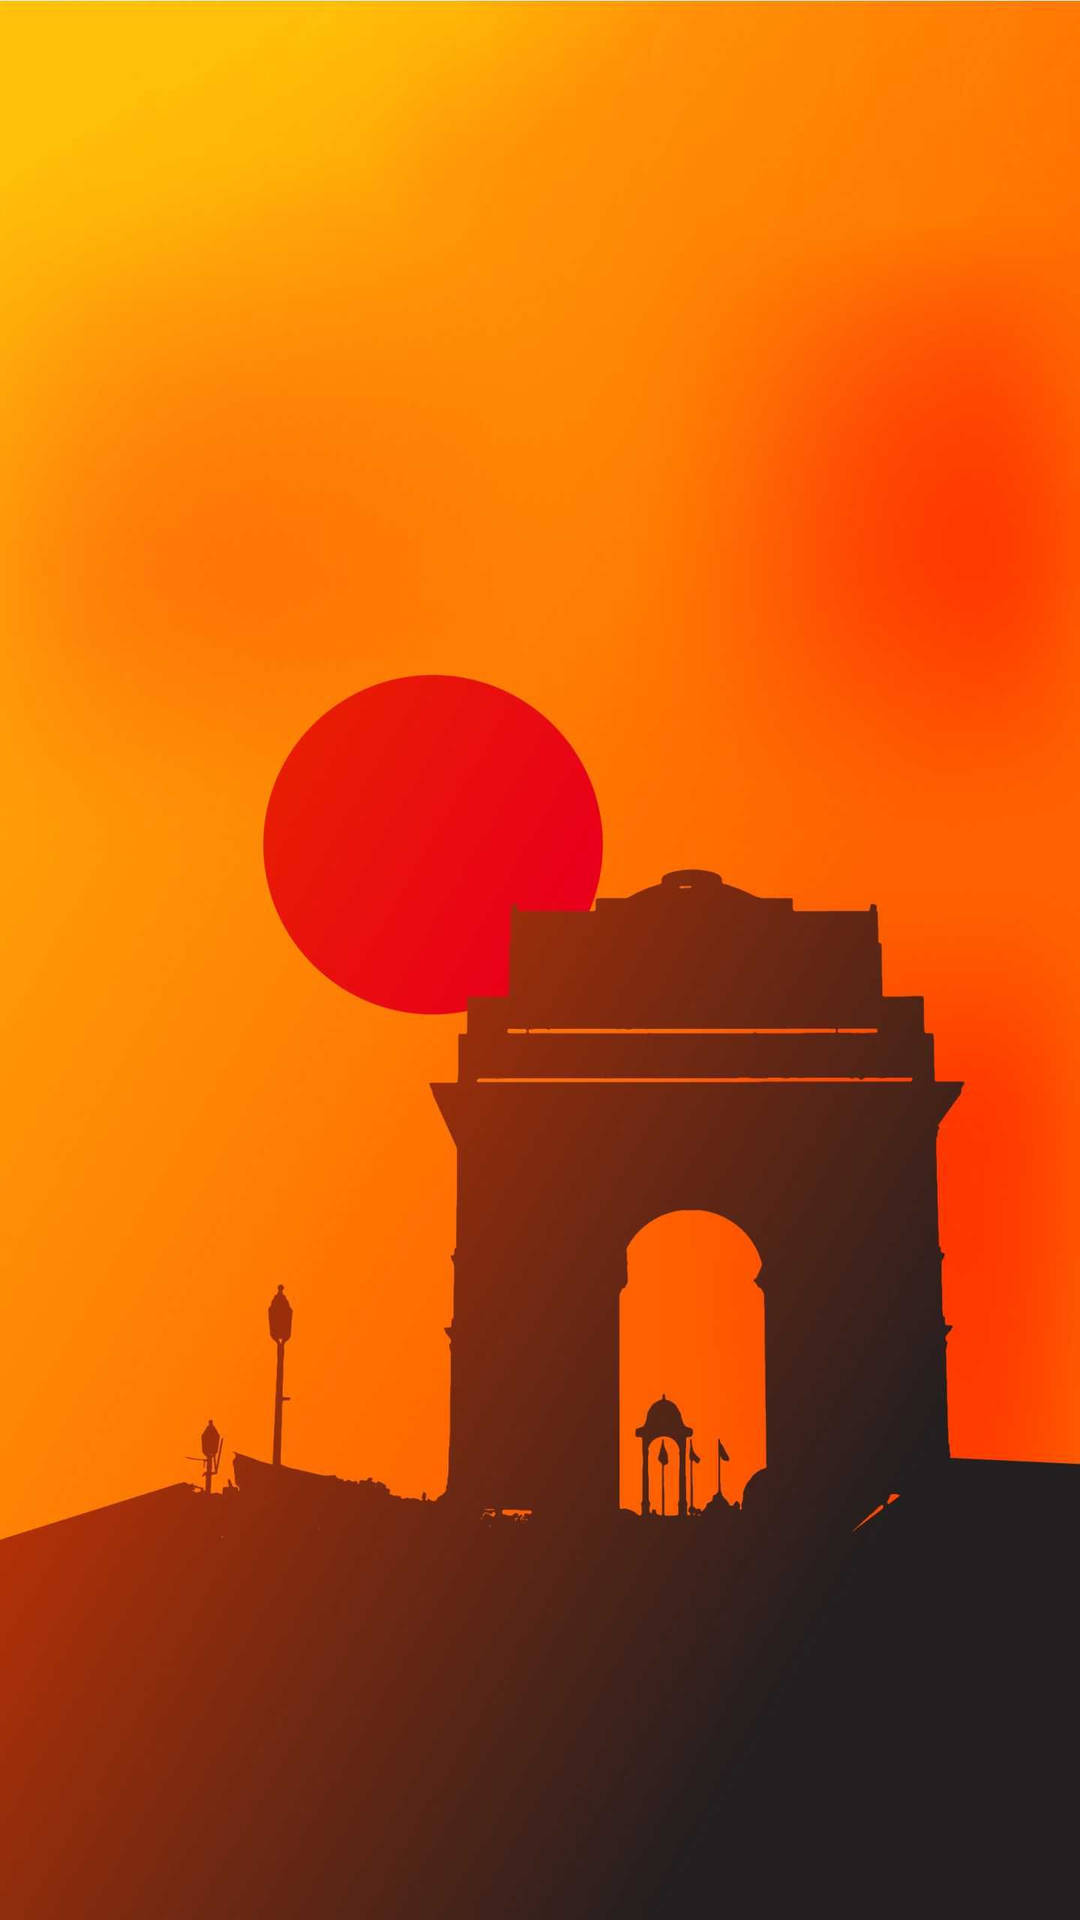 Sunrise India Gate Stock Photos and Images - 123RF